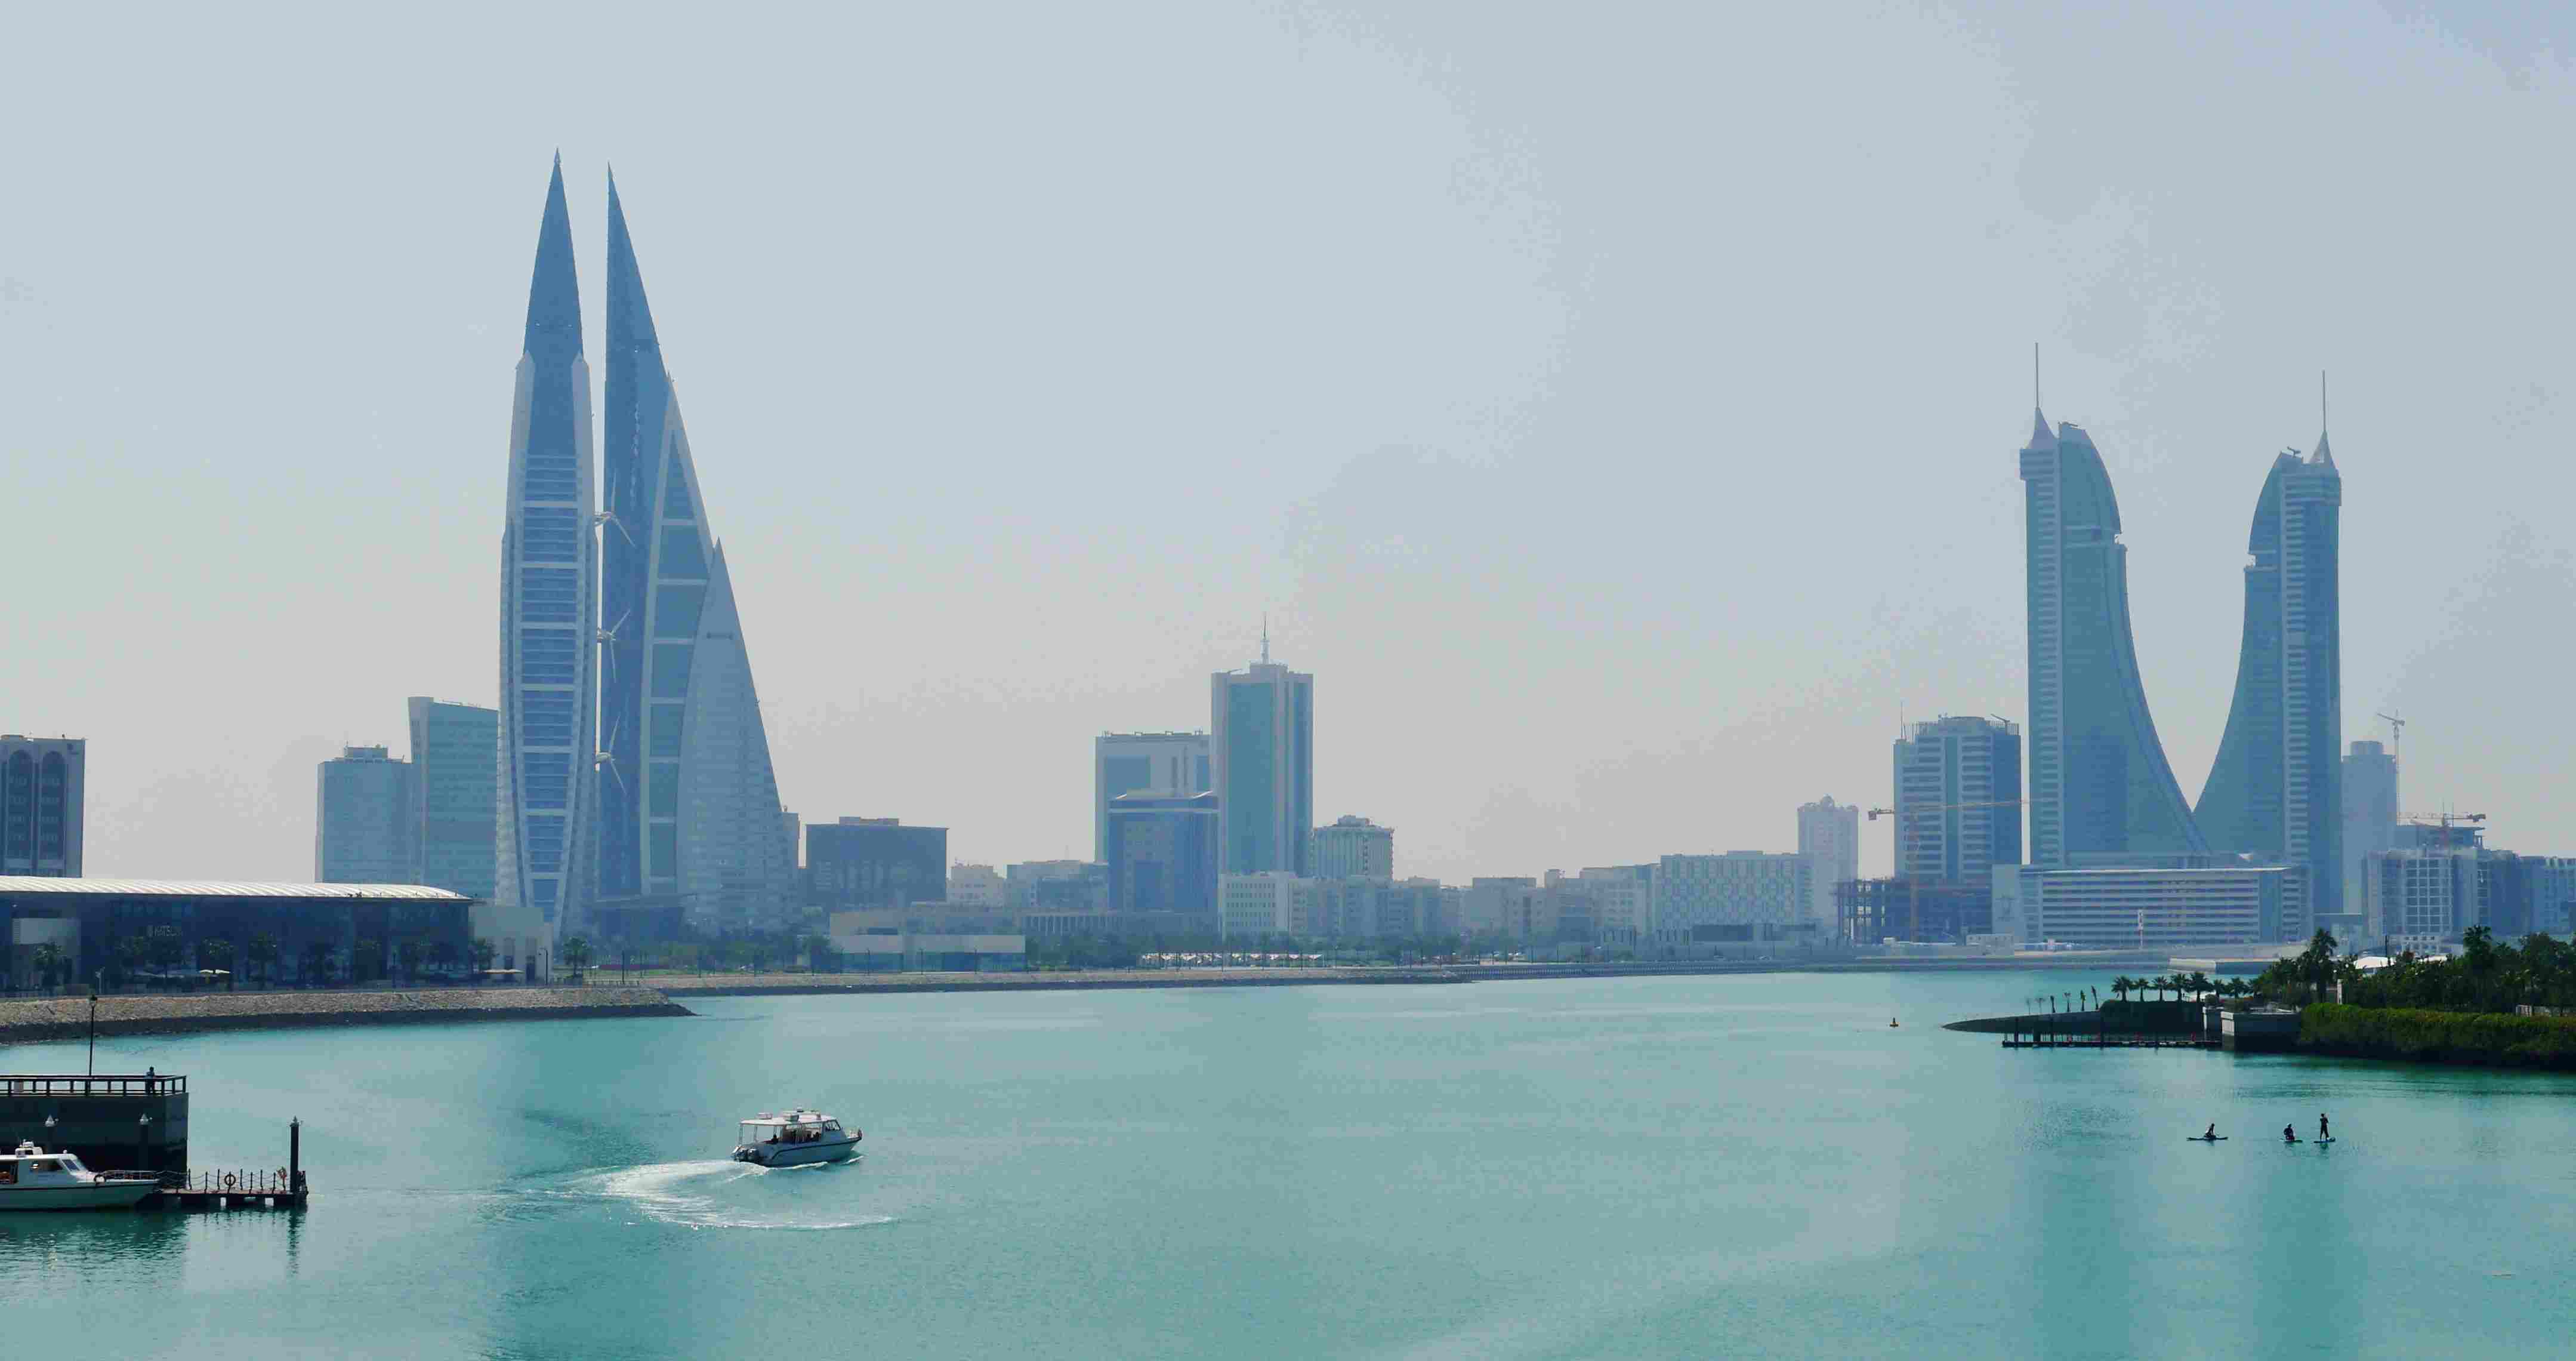 Images Wikimedia Commons/29 Zairon Manama Bahrain World Trade Centre & Harbour.jpg